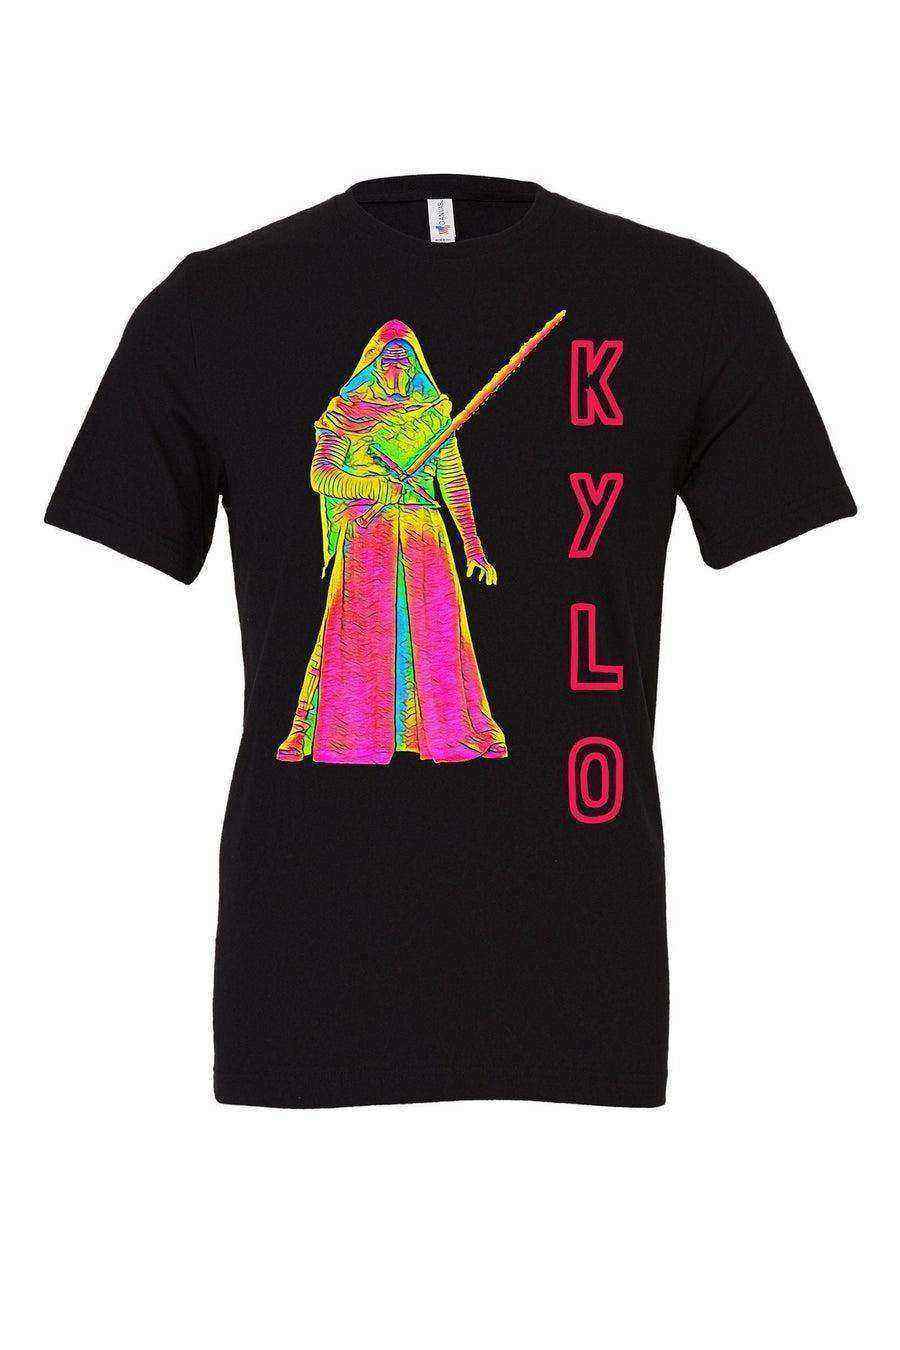 Kylo Neon Shirt | Star Wars Shirt - Dylan's Tees